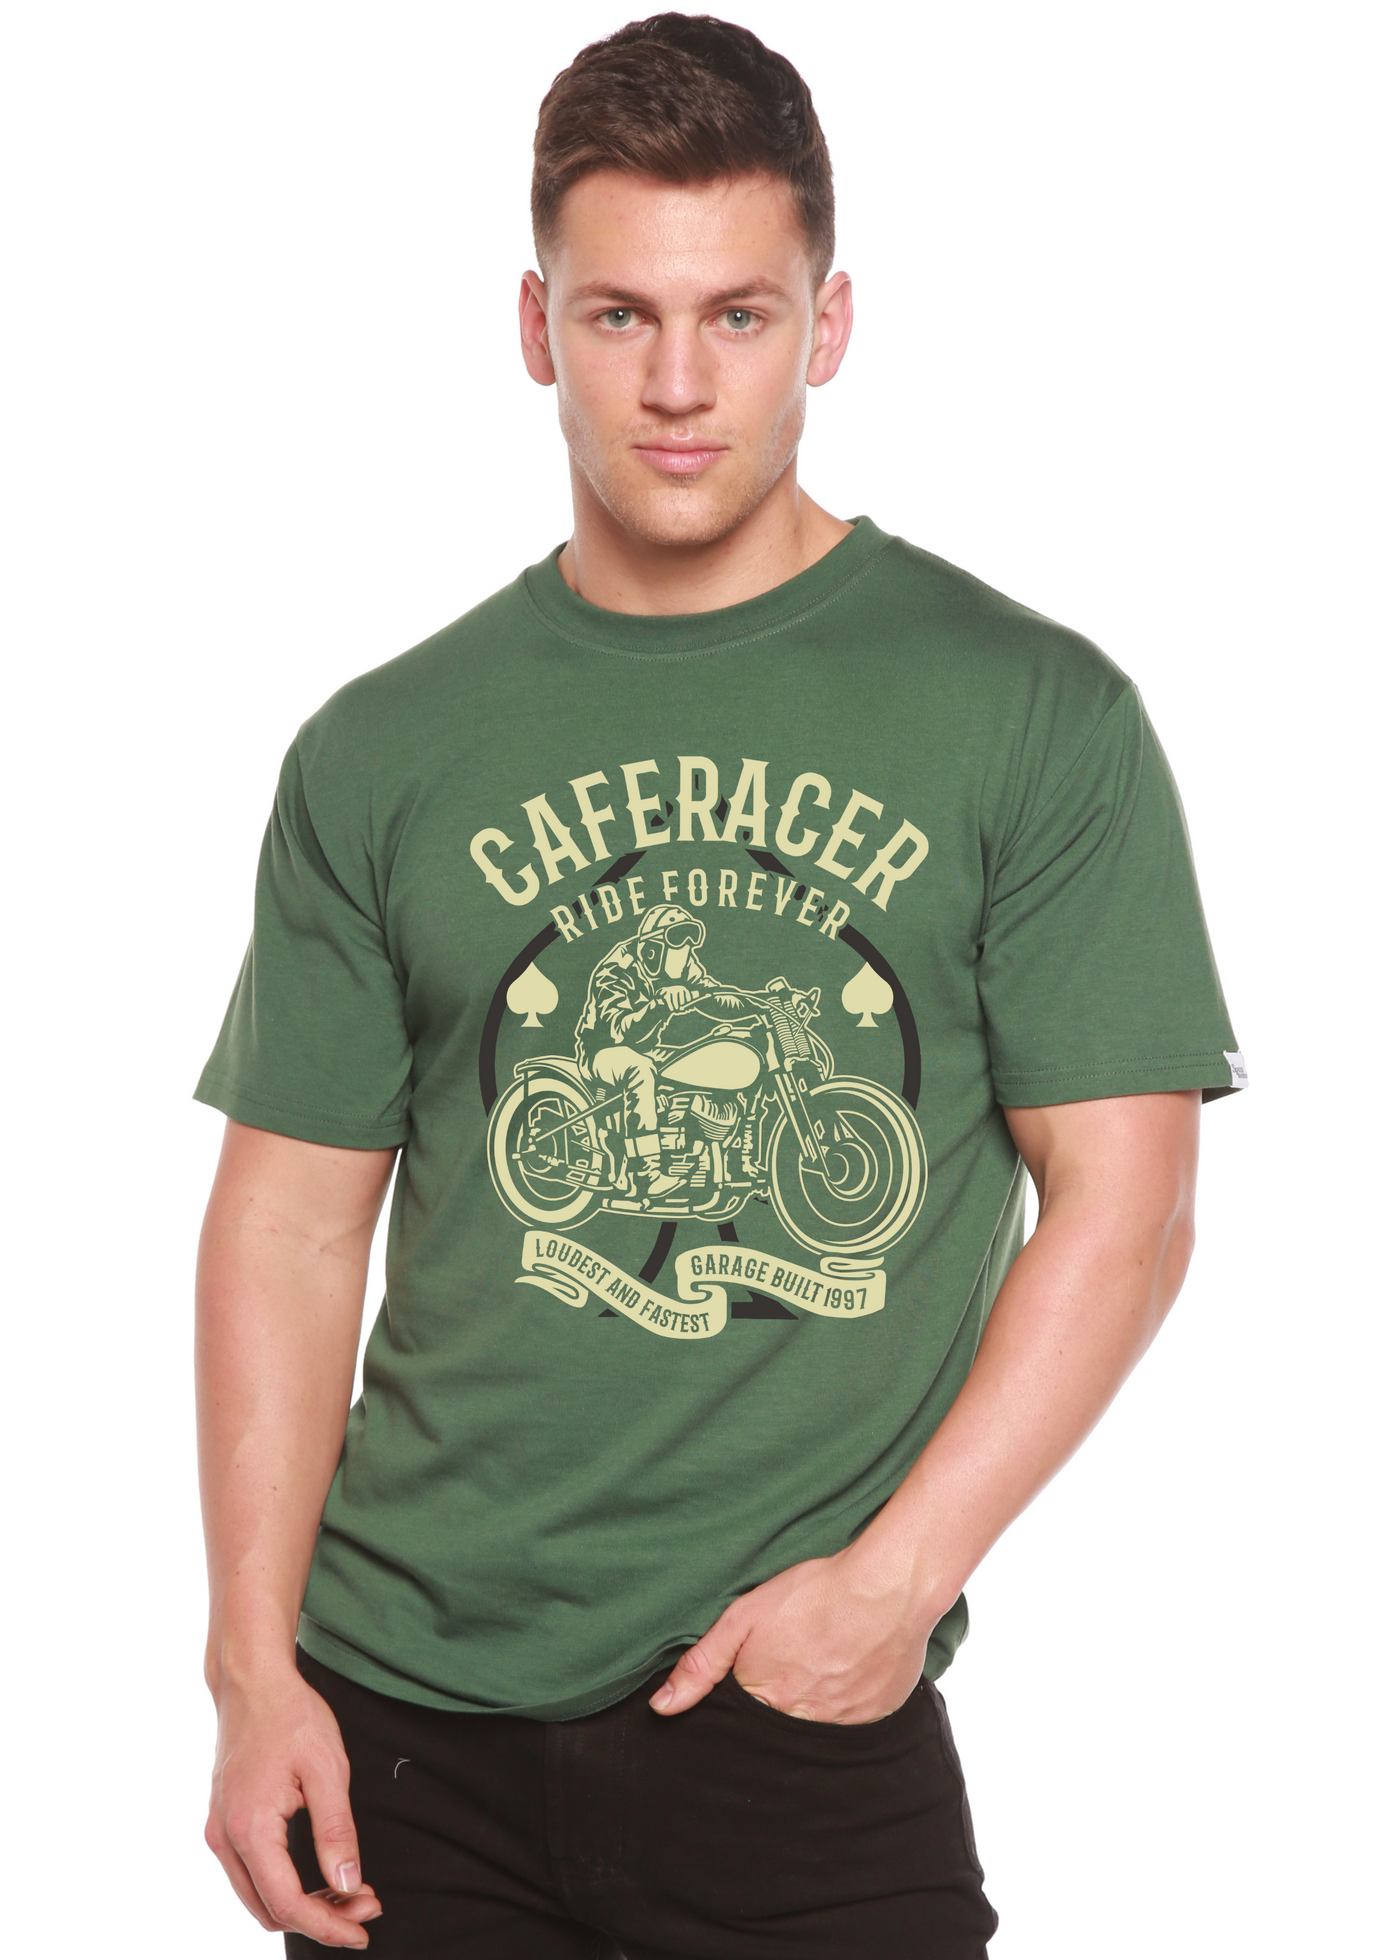 Caferacer Ride Forever men's bamboo tshirt pine green